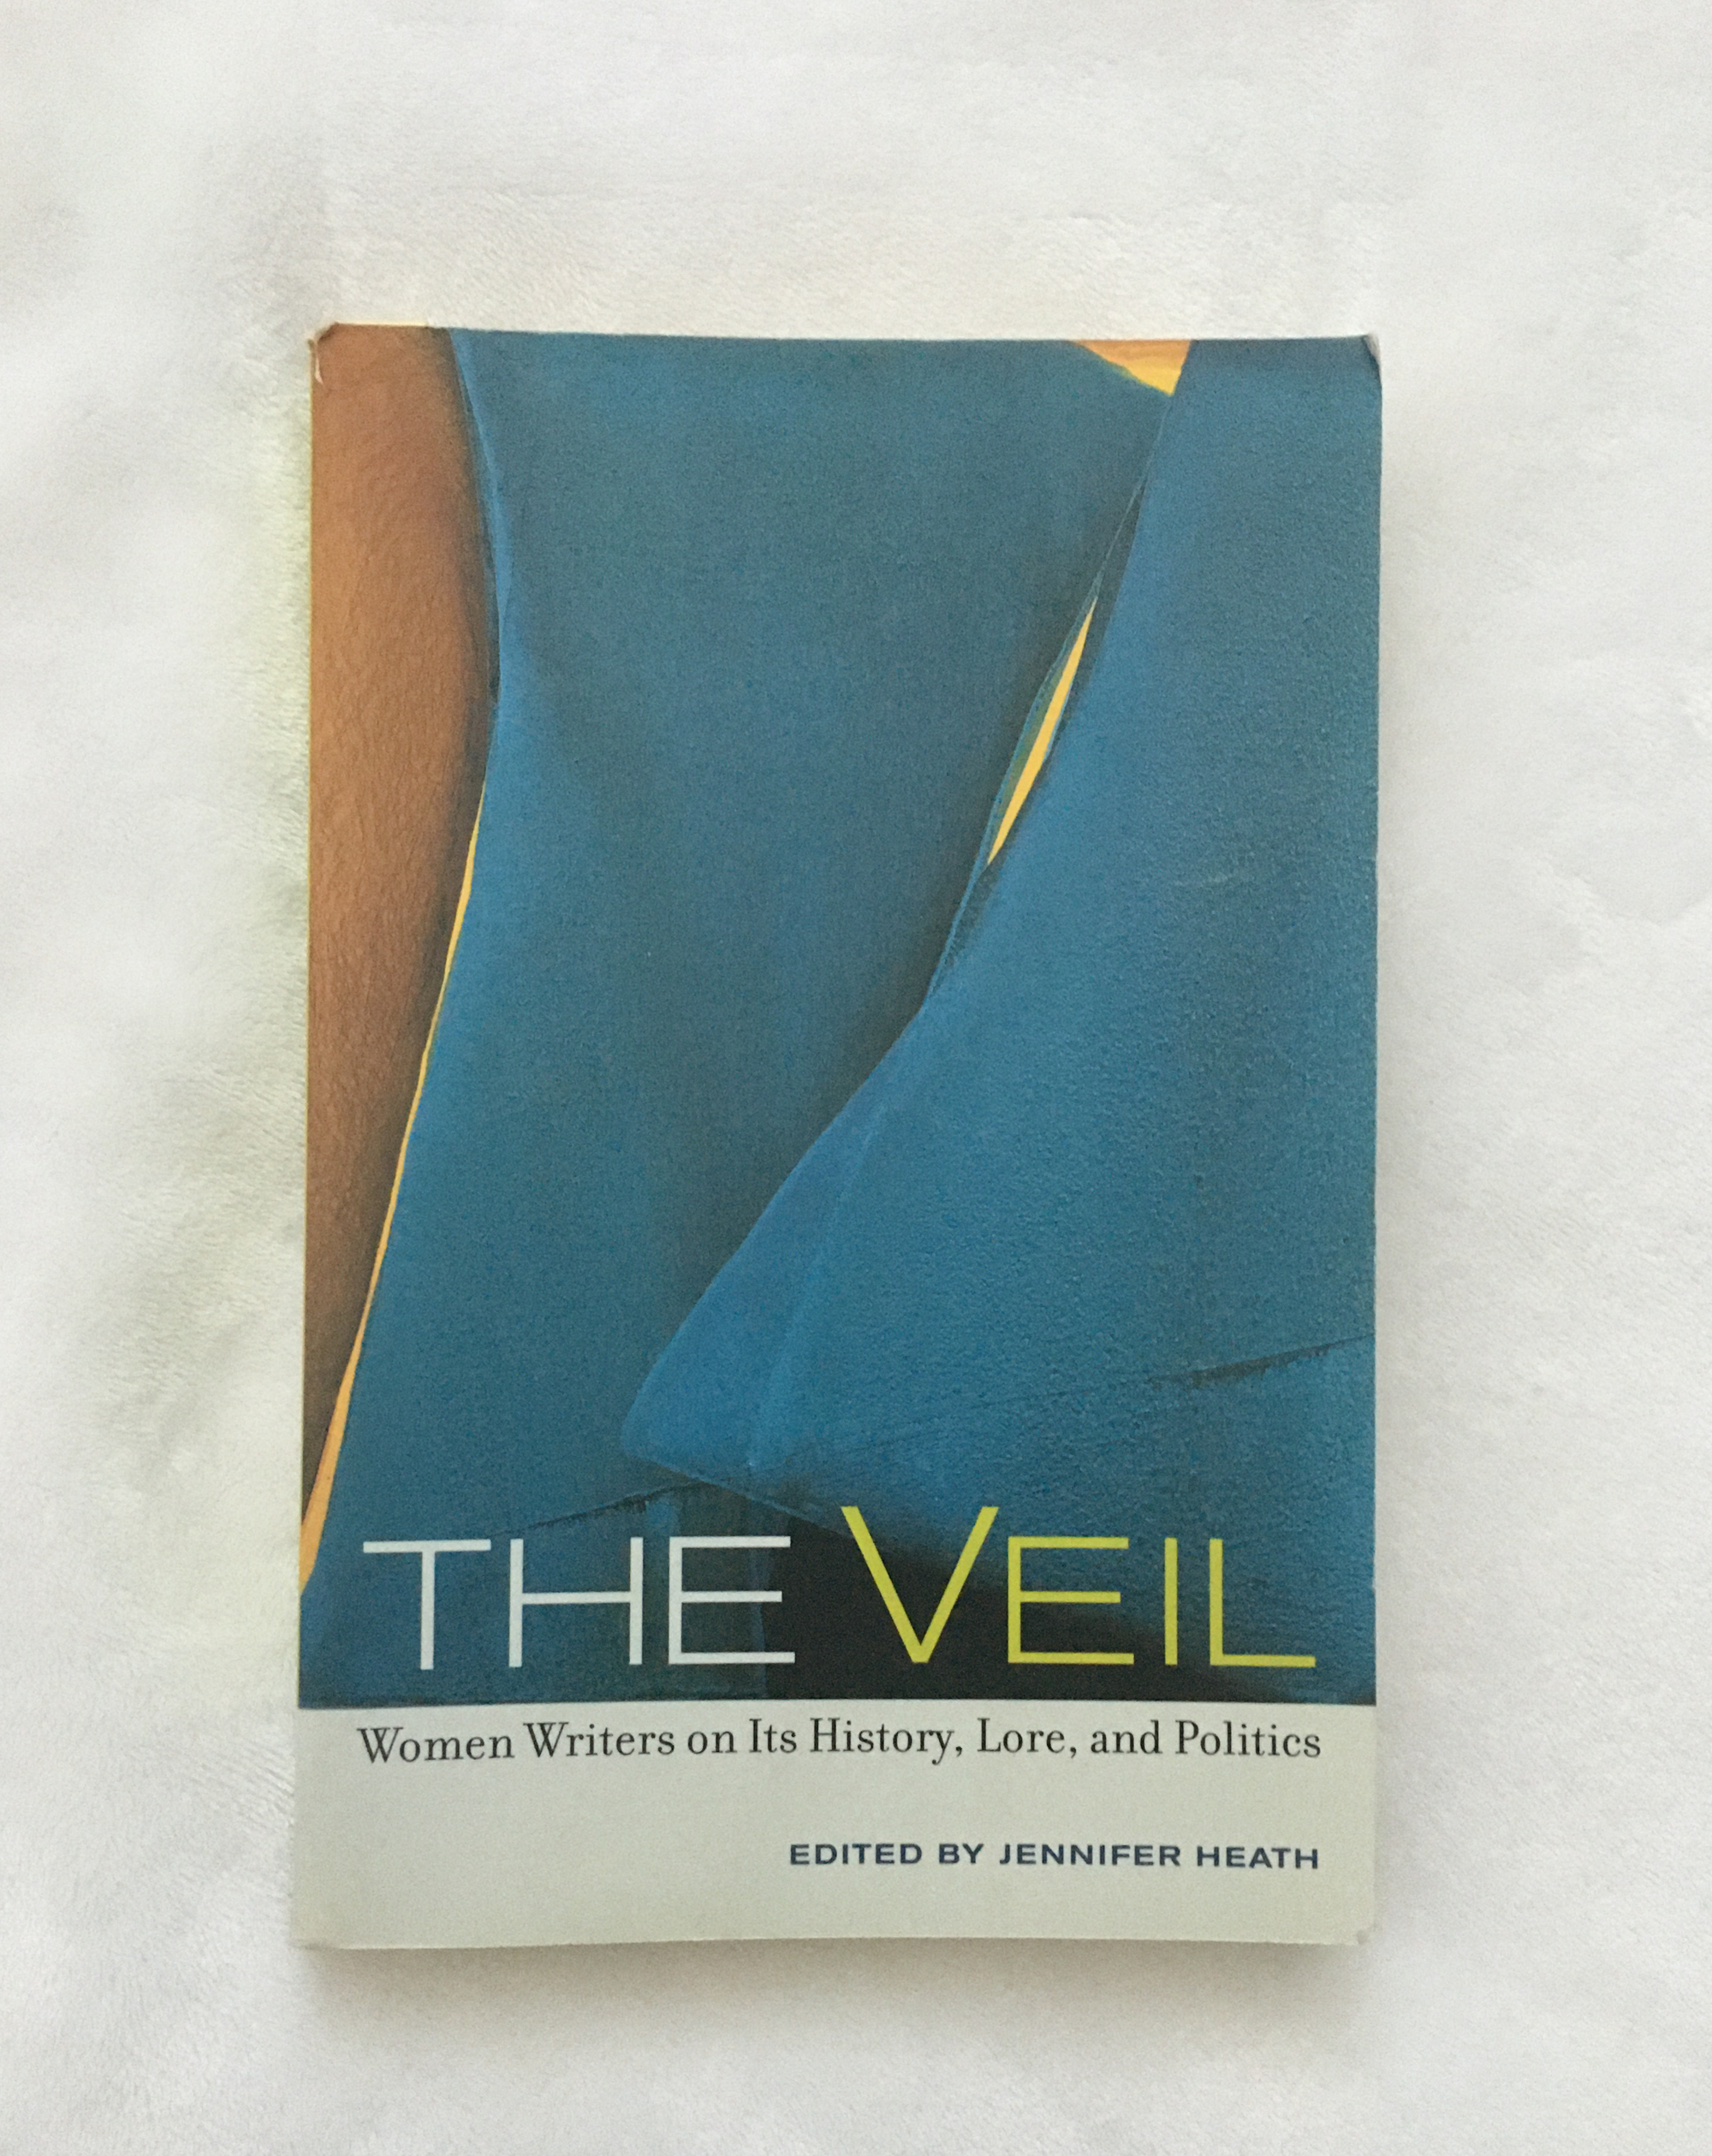 The Veil: Women Writers on its History, Lore, and Politics edited by by Jennifer Heath, book, Ten Dollar Books, Ten Dollar Books